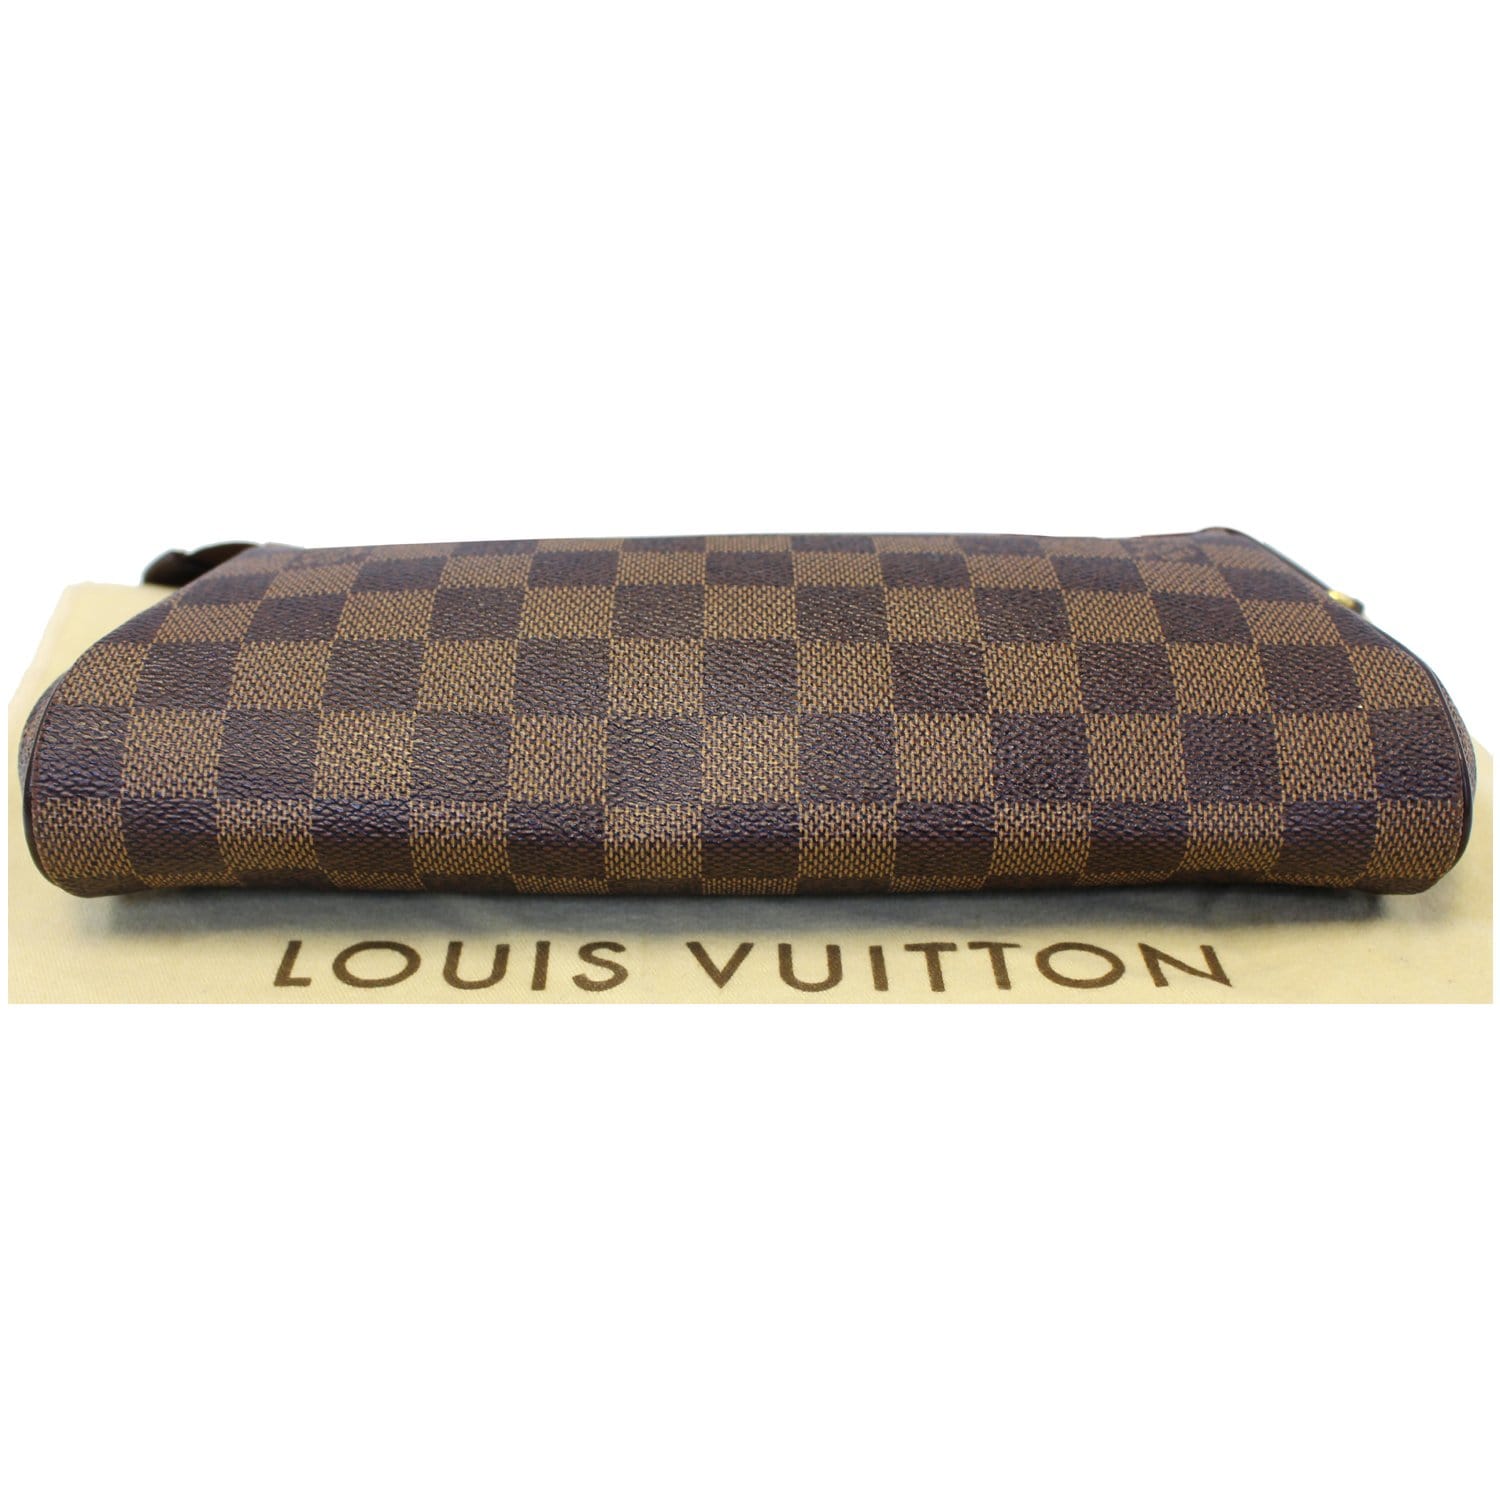 Louis Vuitton Damier Ebene Pochette Eva Bag 620lvs616 For Sale at